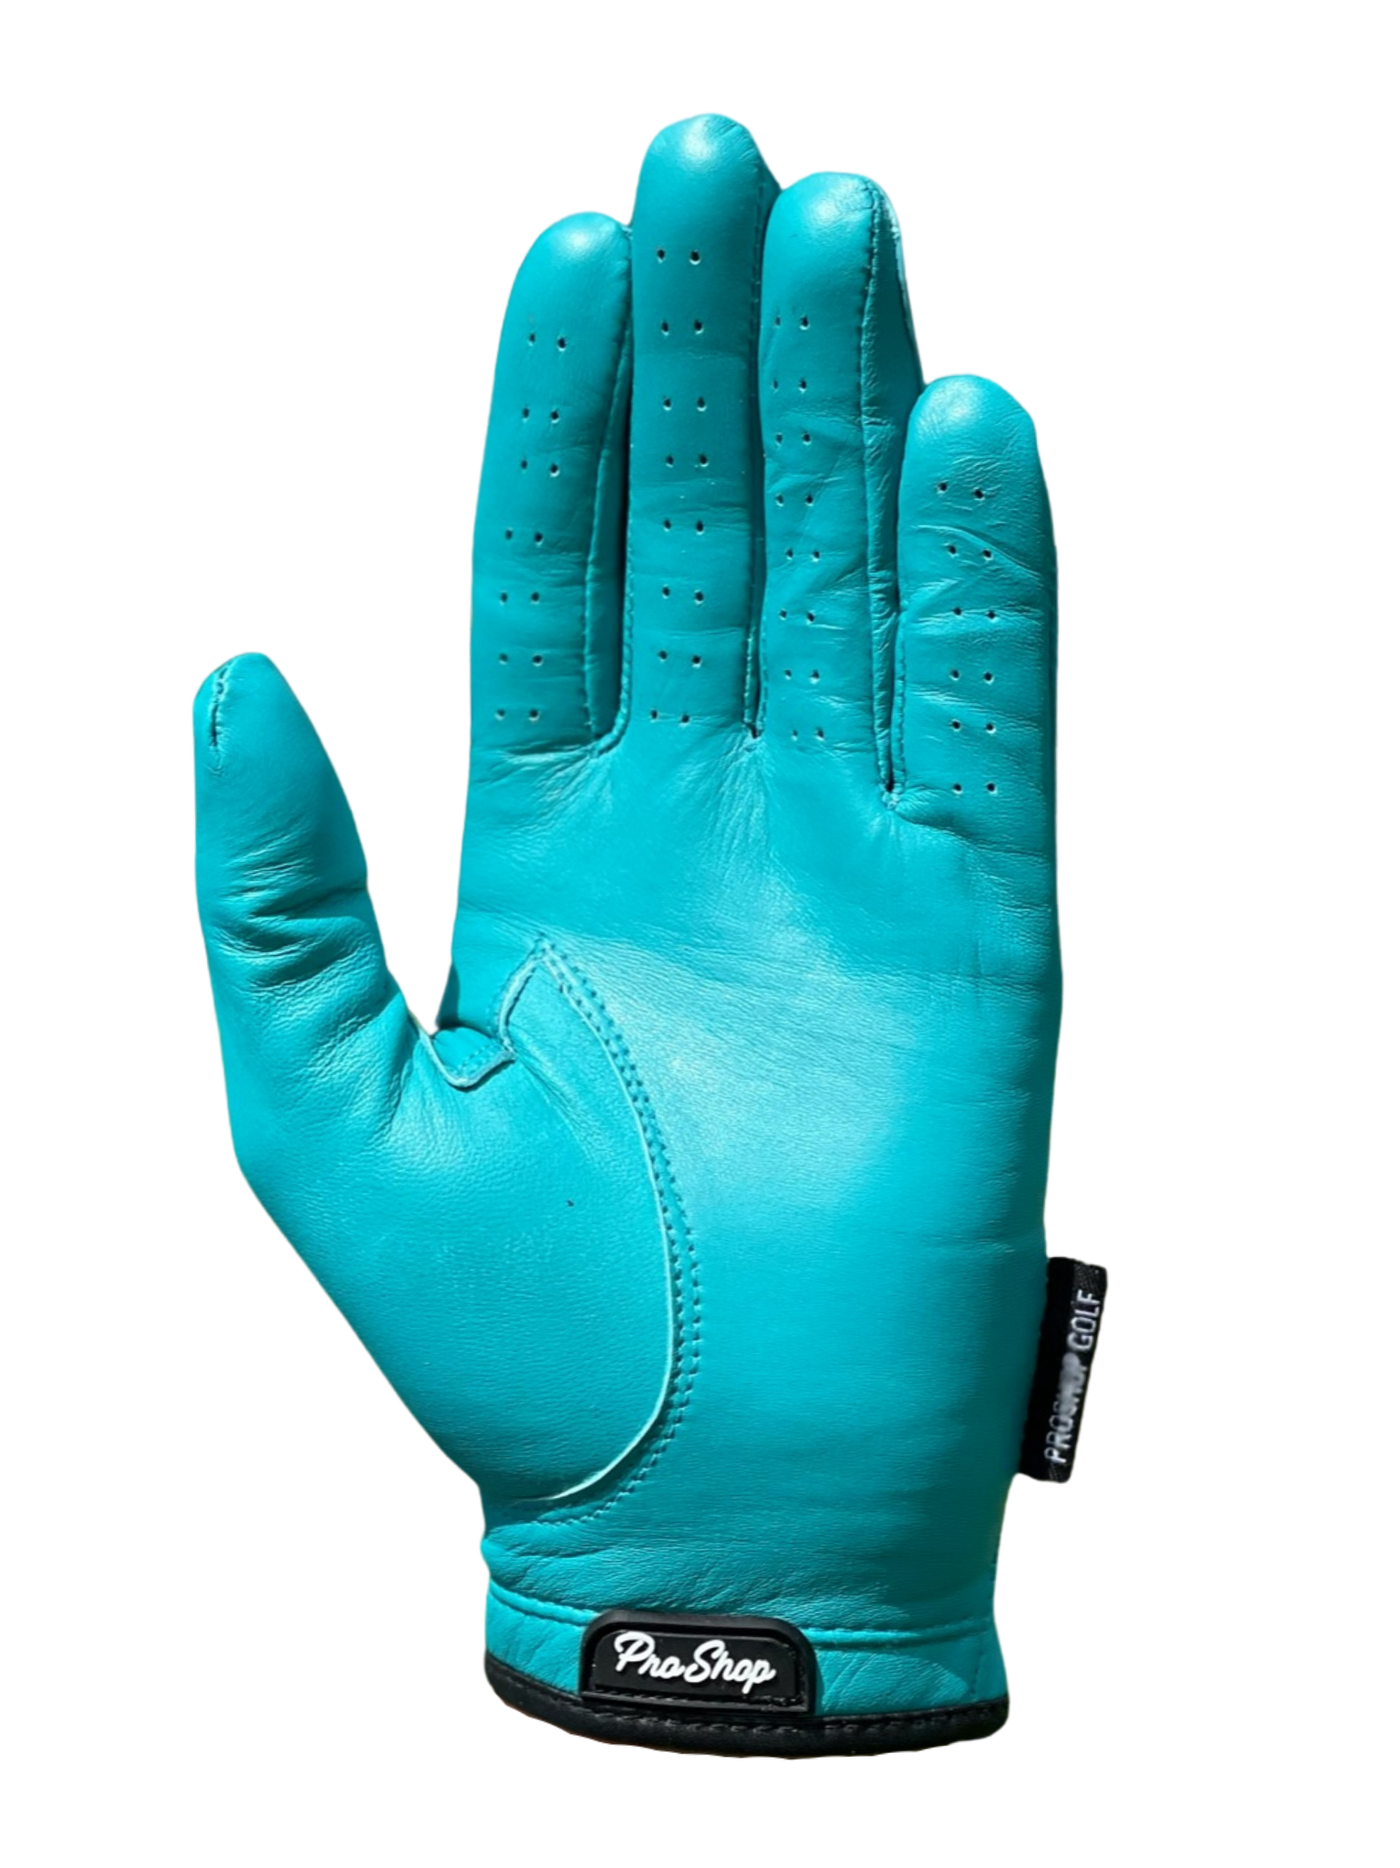 The Signature Glove